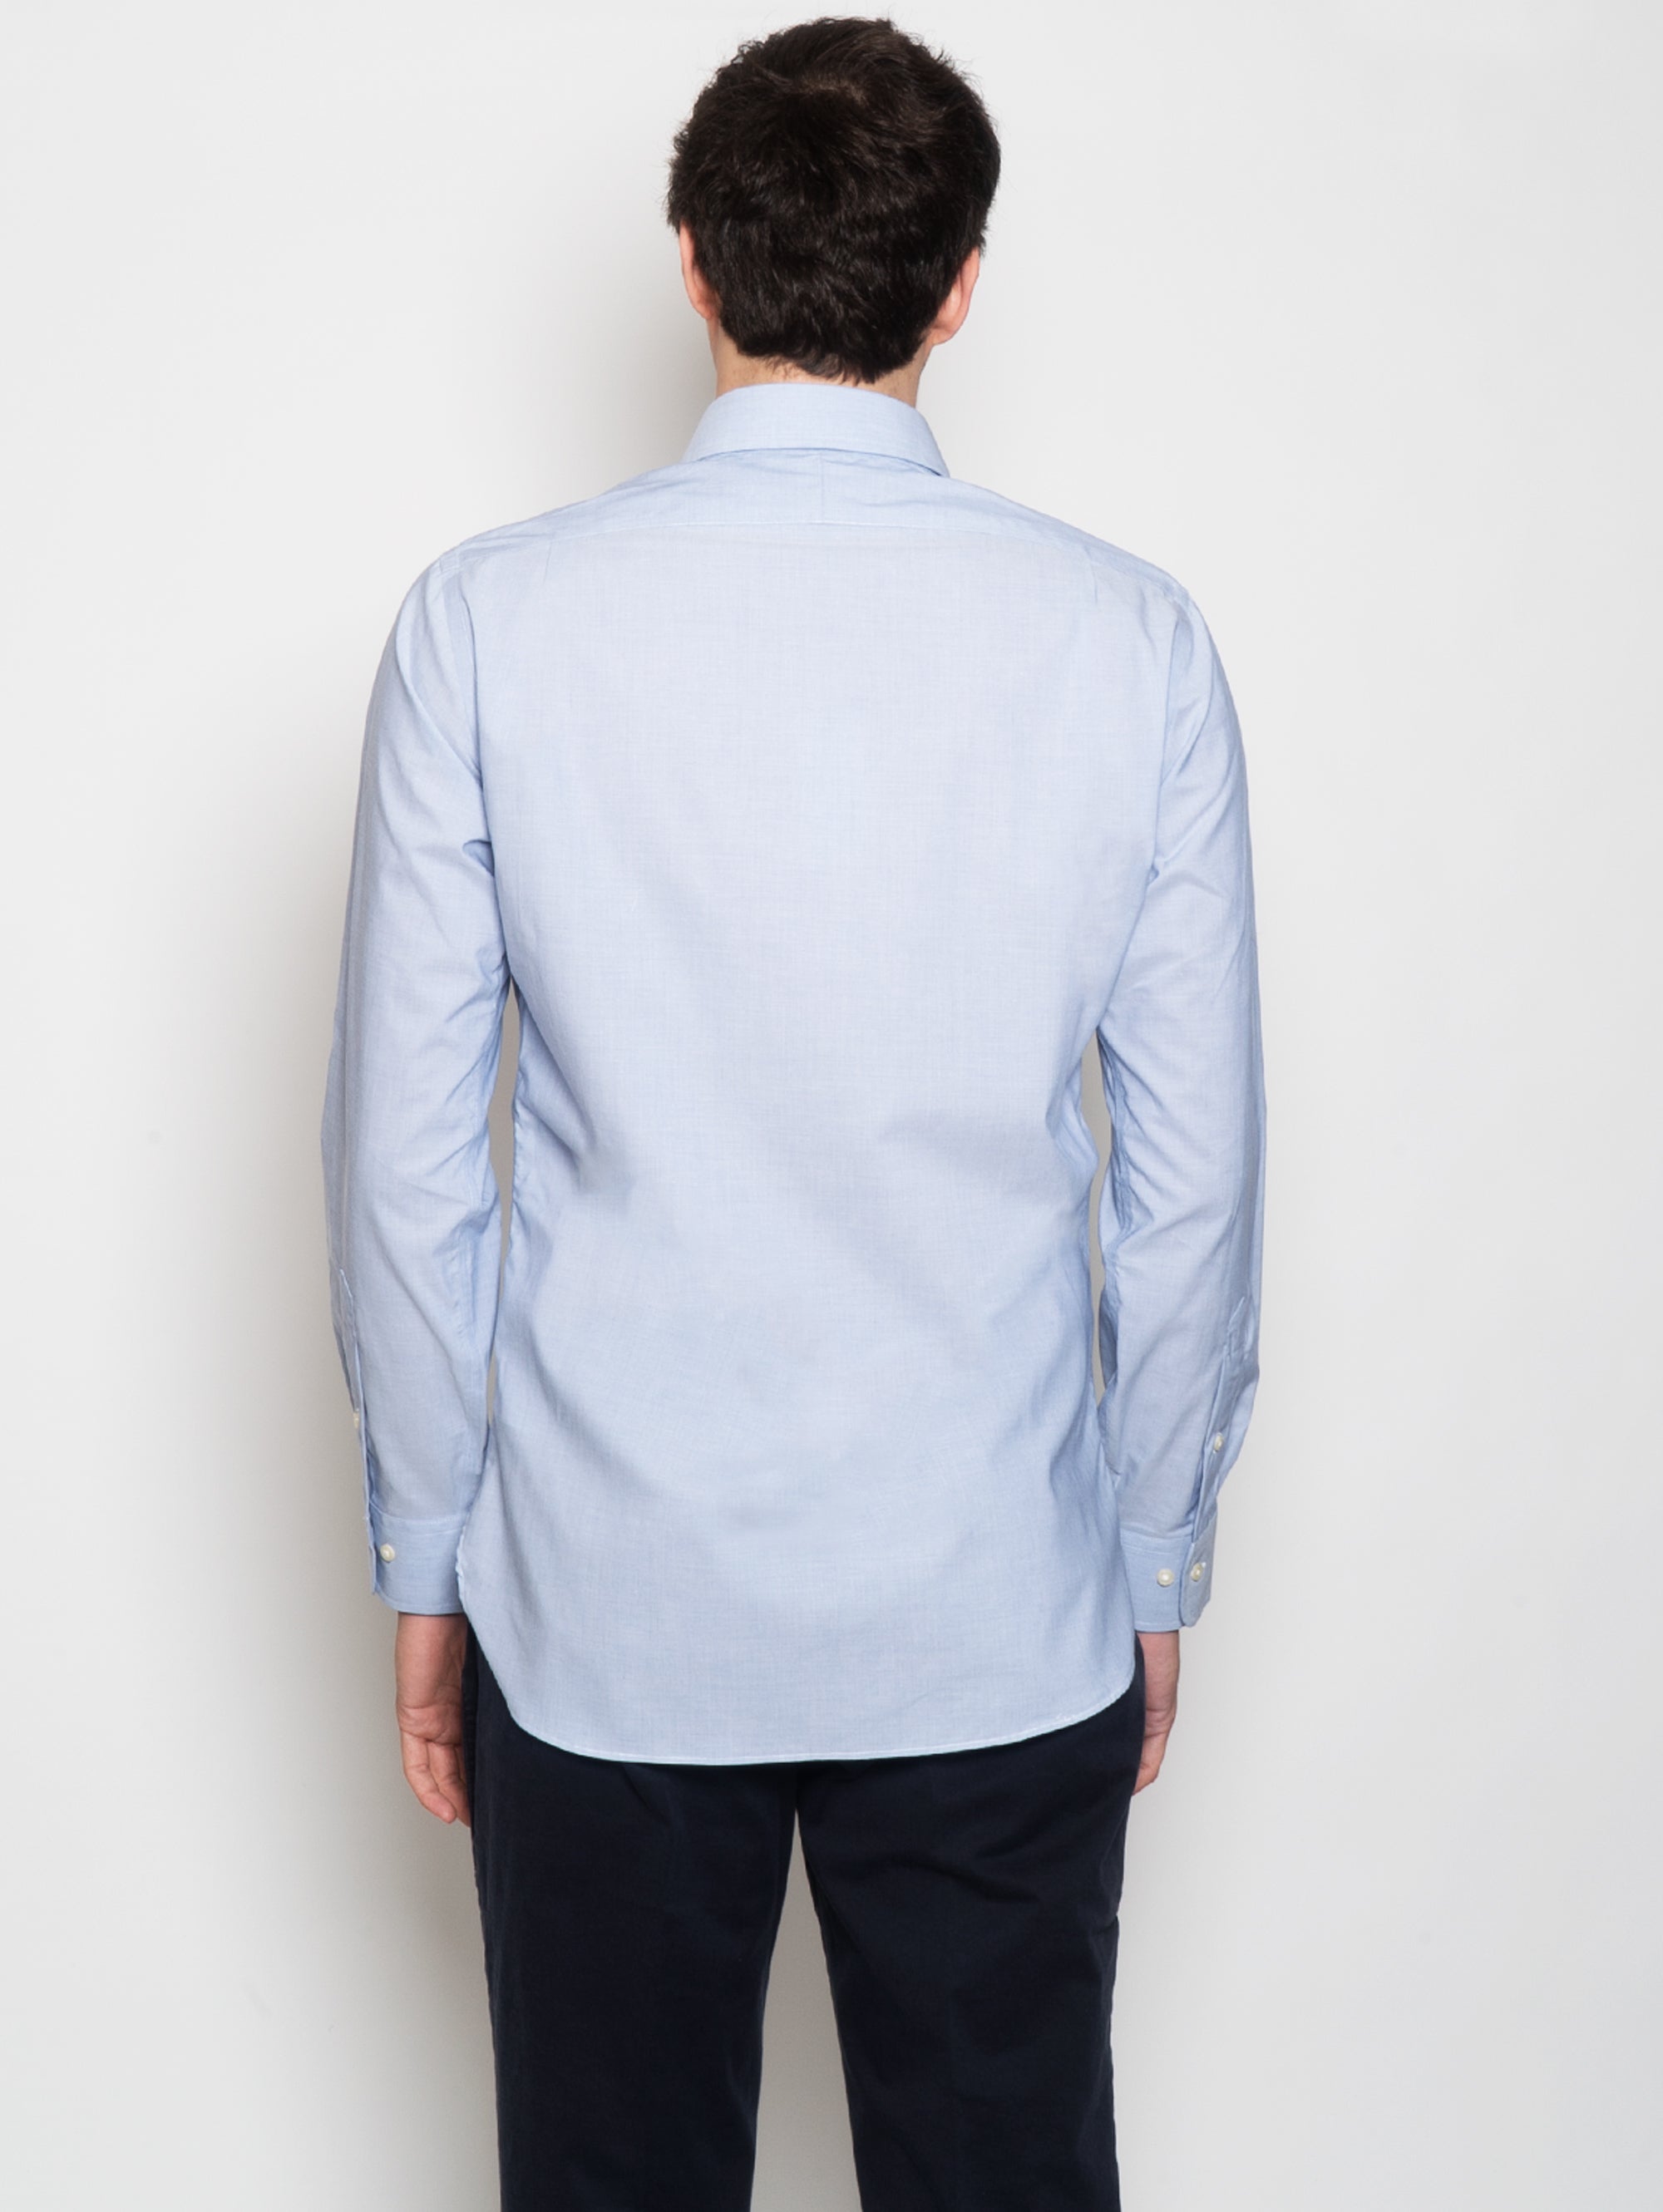 Elegant Shirt with Light Blue Regent Collar